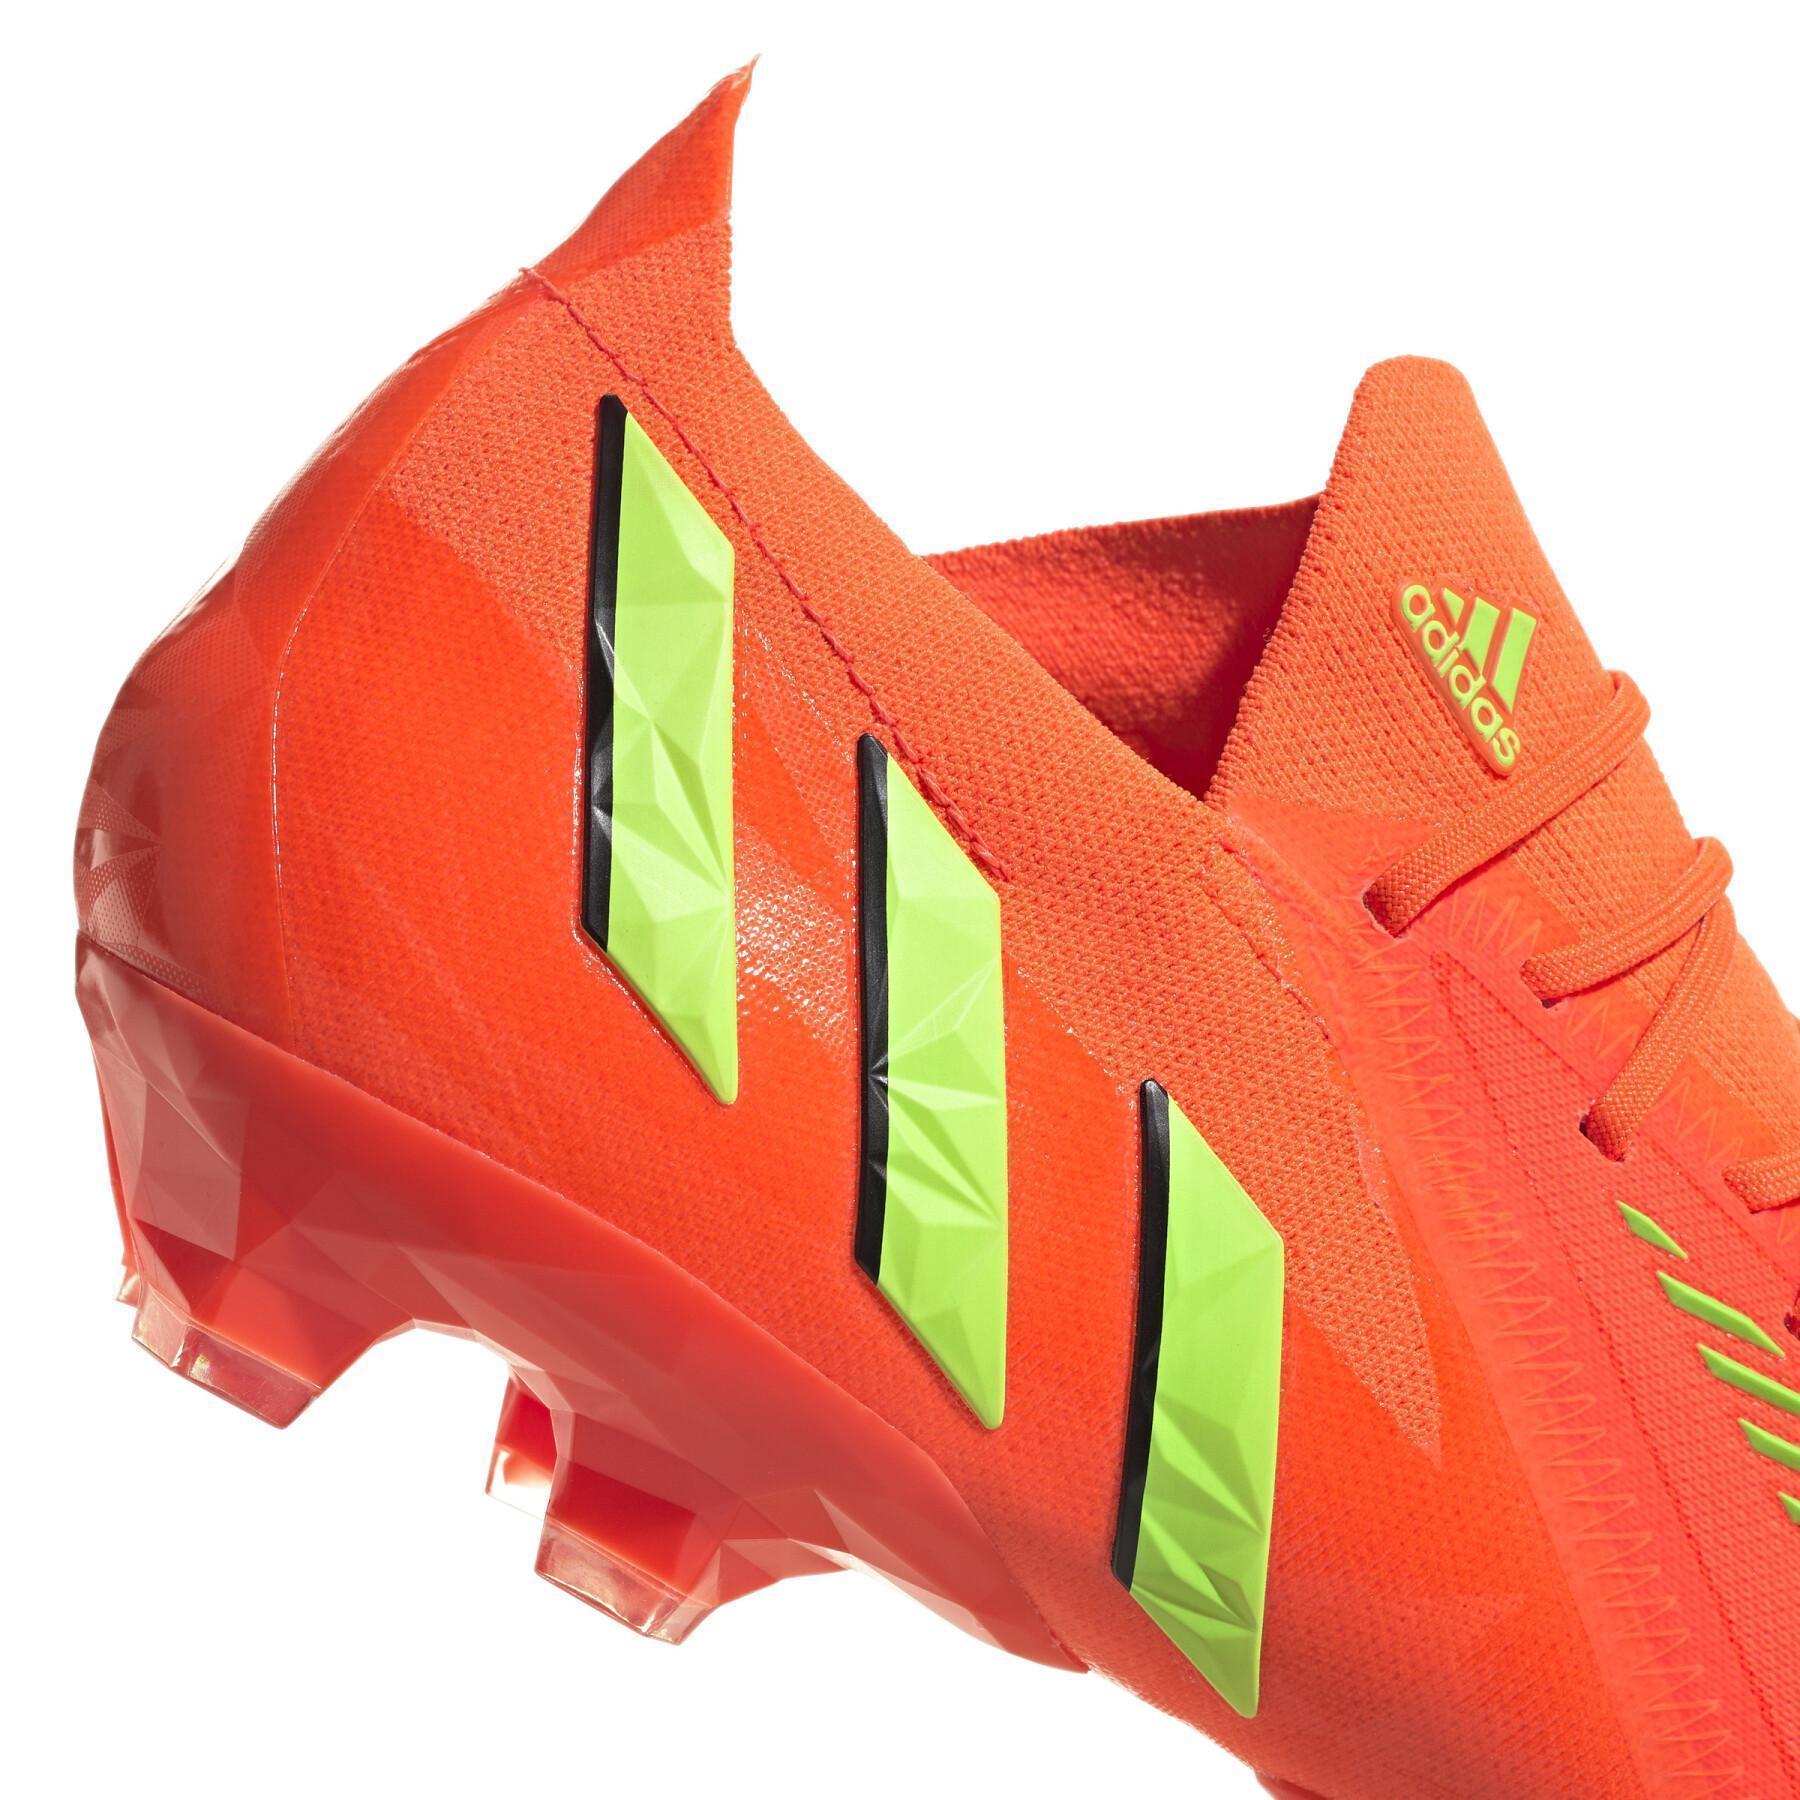 Chaussures de football adidas Predator Edge.1 AG